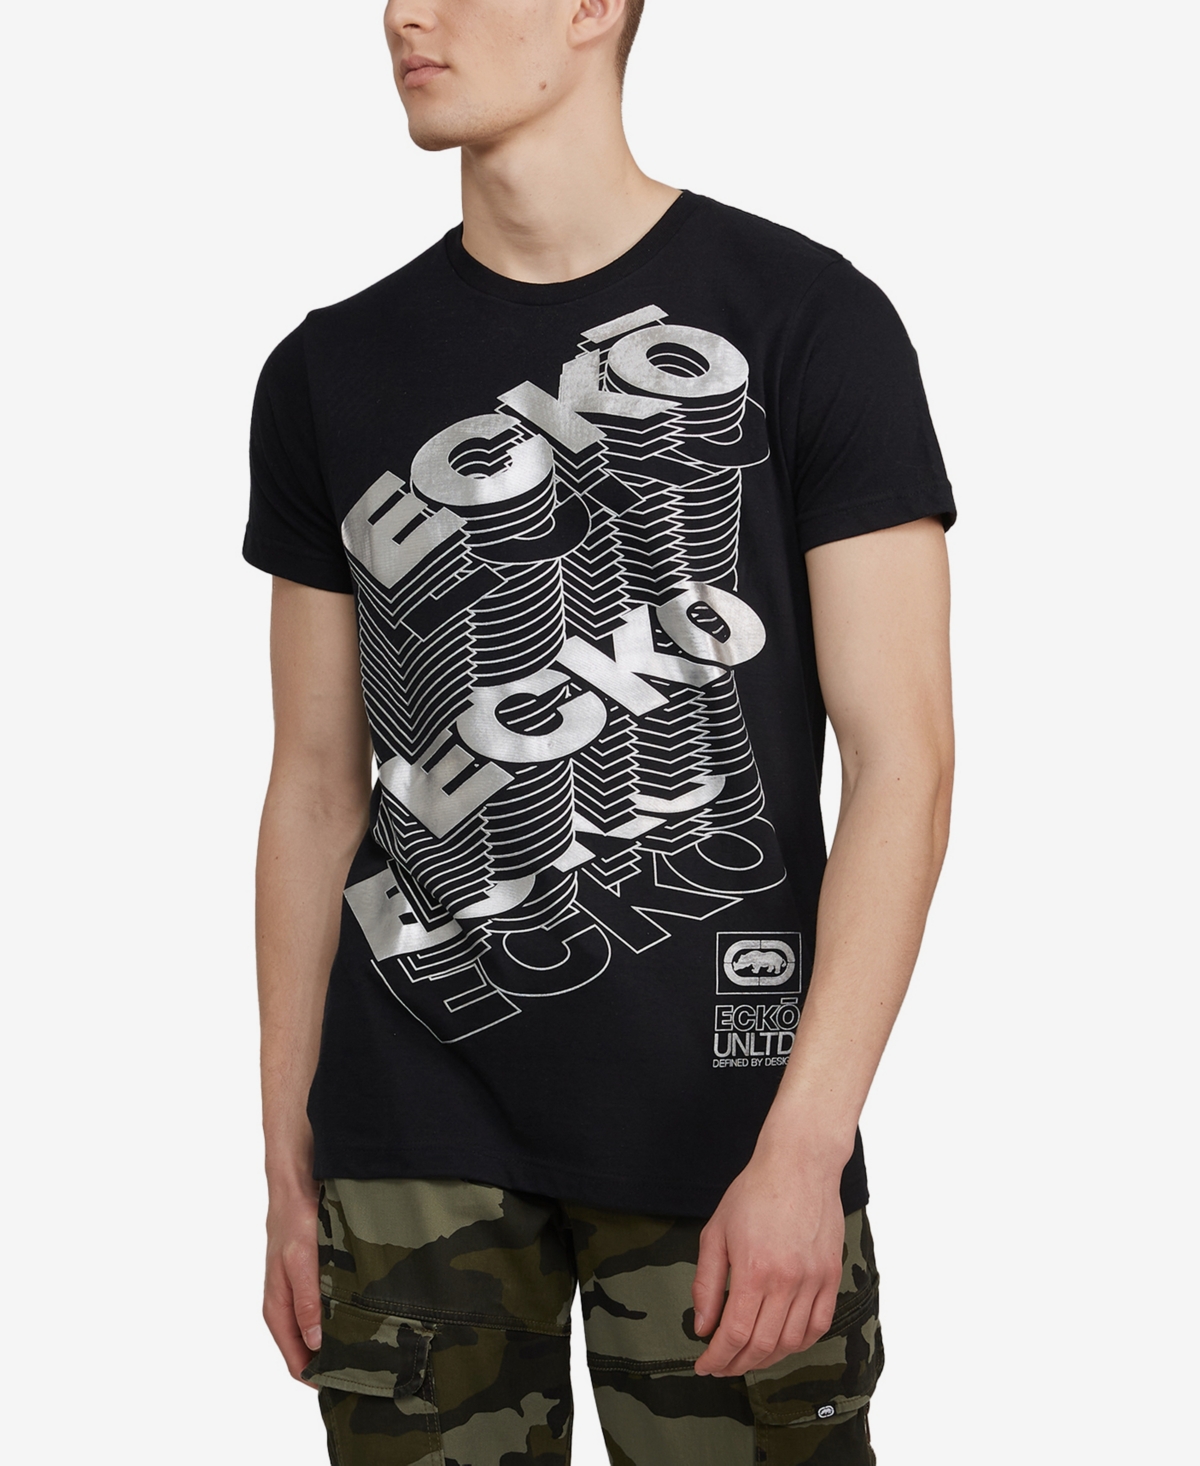 Ecko Unltd Men's Big and Tall Broadband Graphic T-shirt - Gray